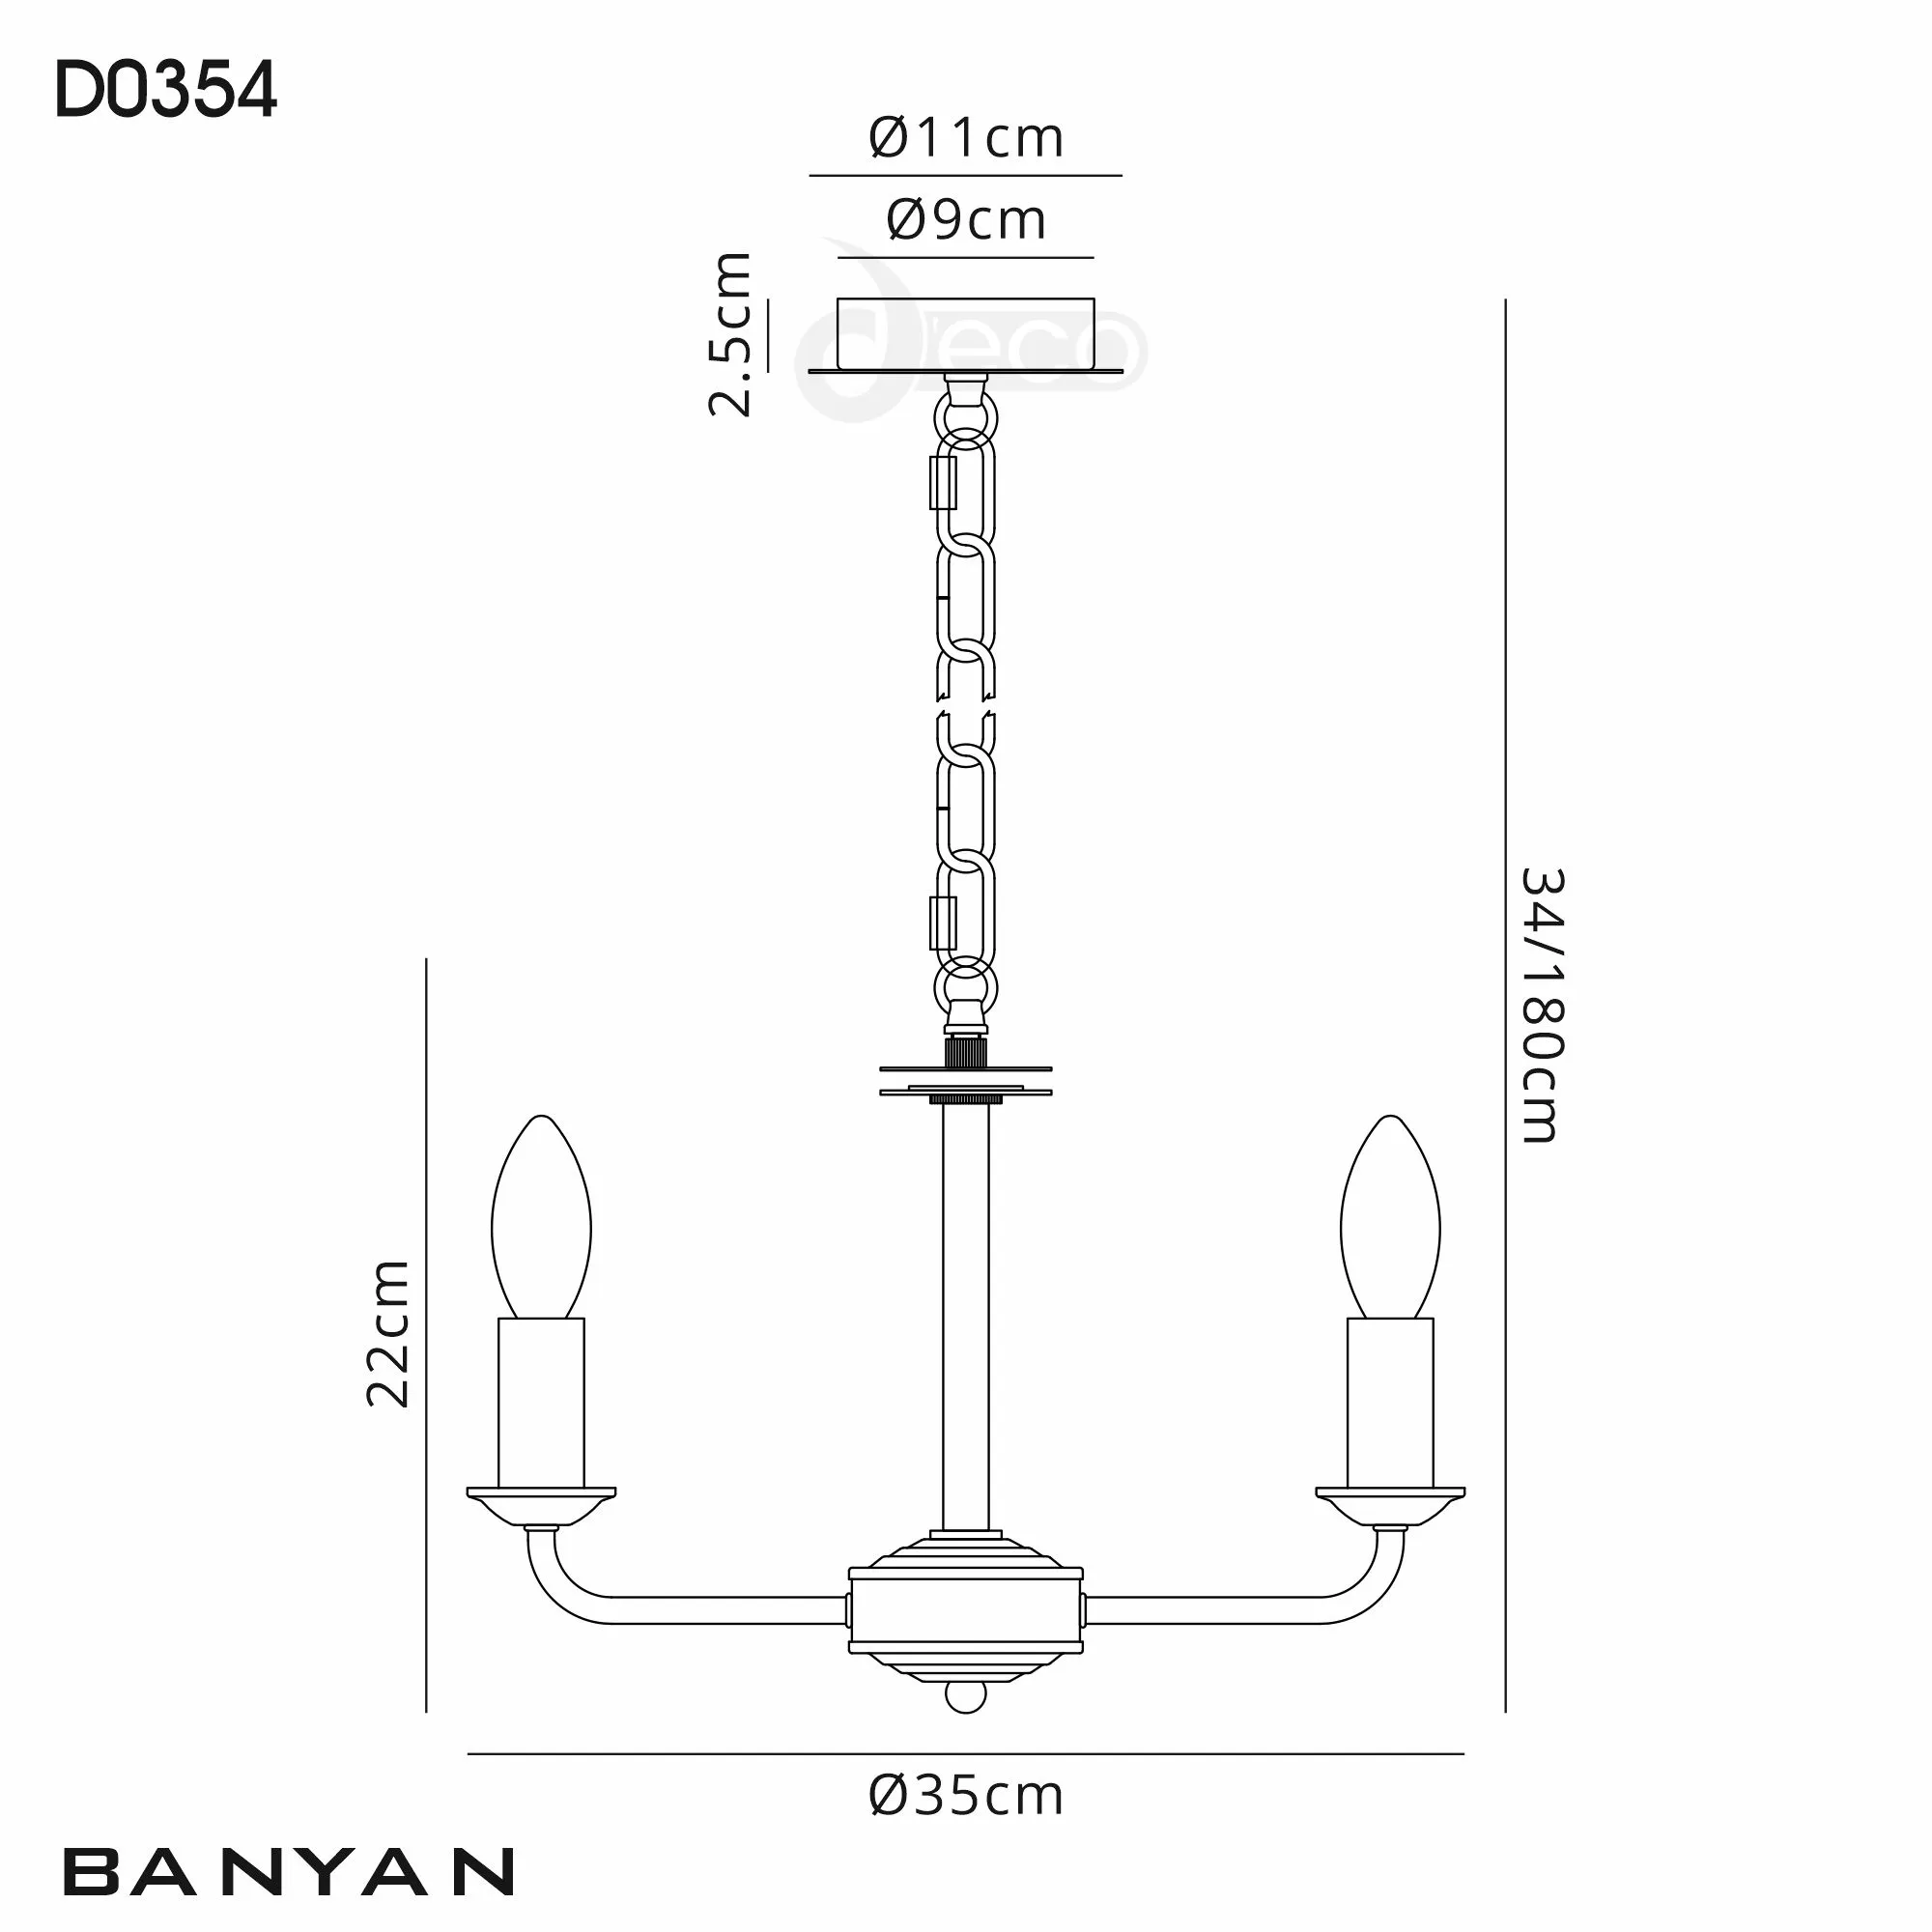 Banyan 45cm 3 Light Pendant Polished Chrome; Black DK0859  Deco Banyan CH BL